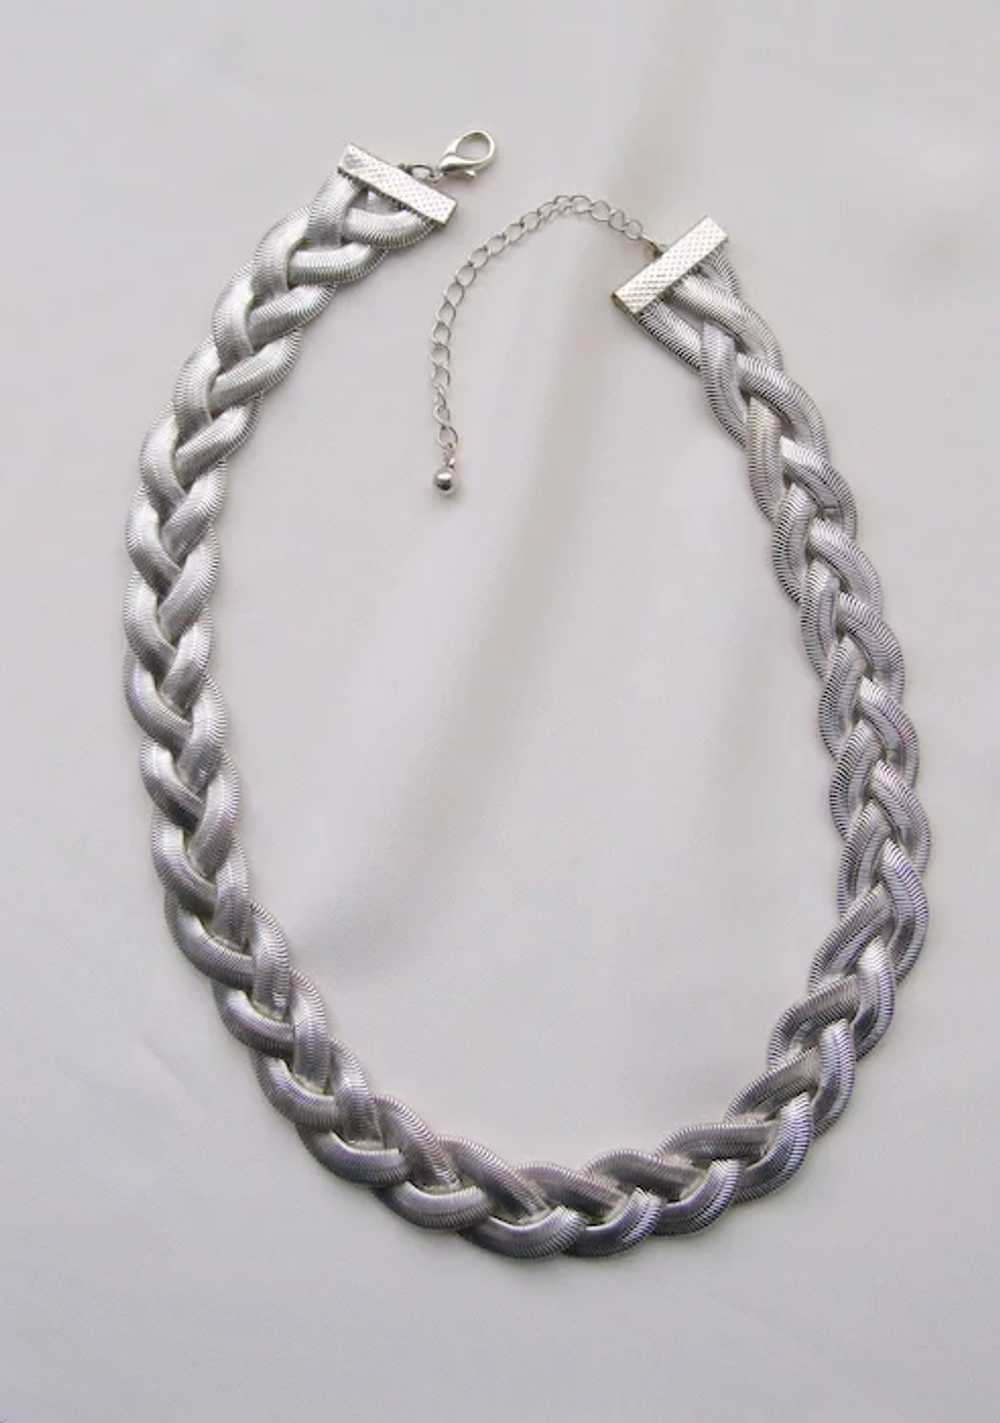 Vintage Serpentine Braid Necklace - image 7